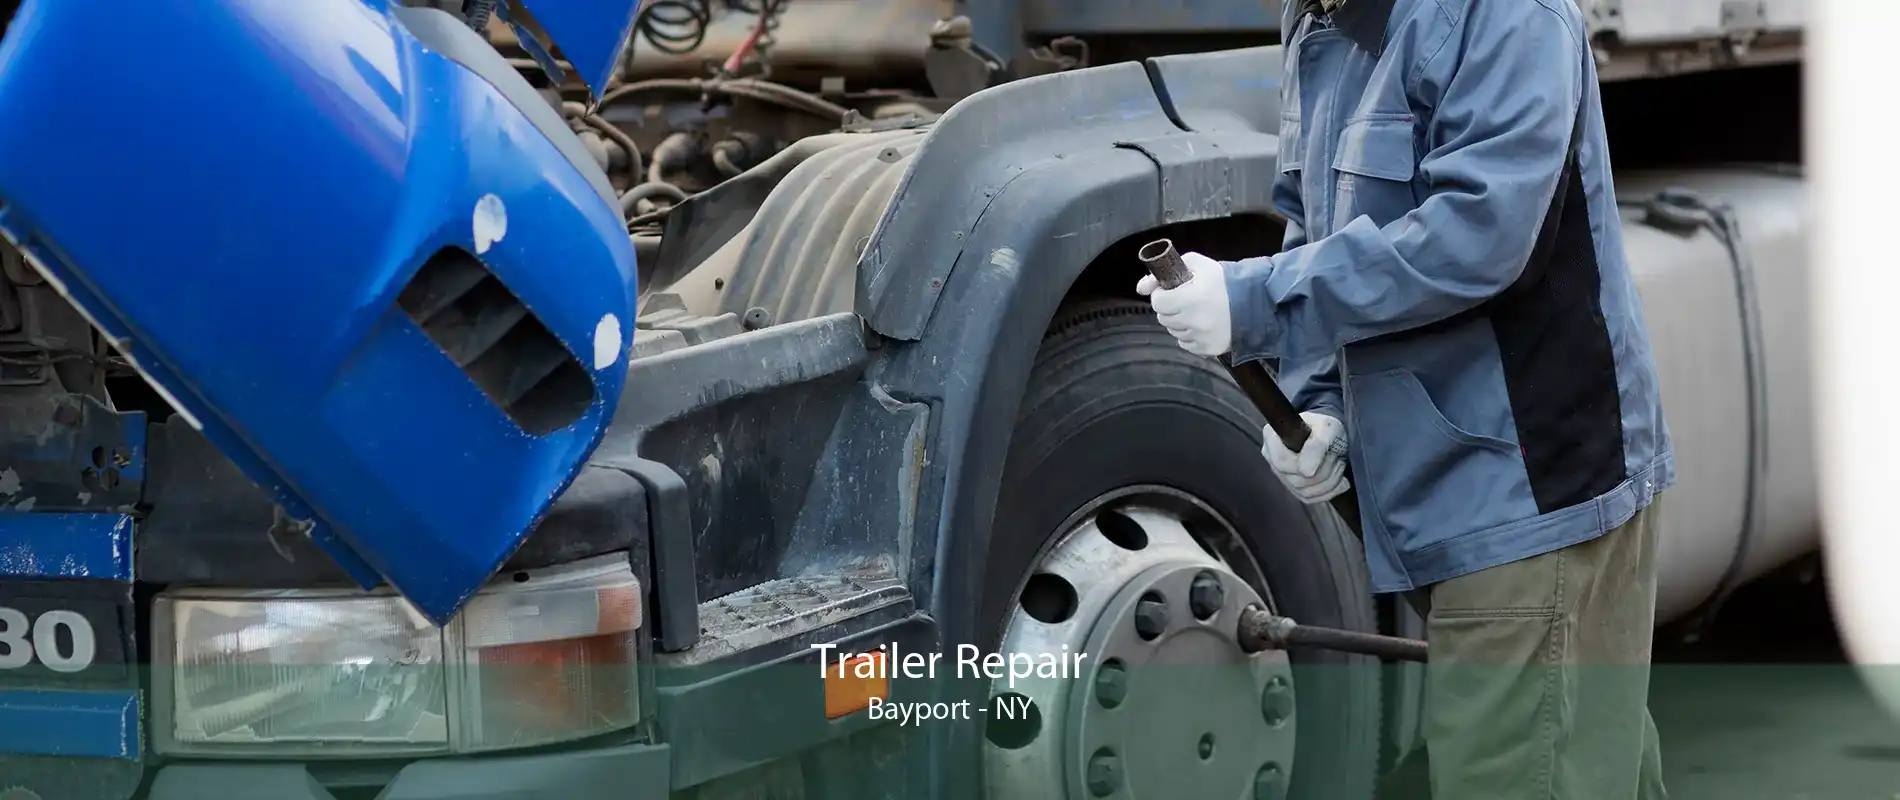 Trailer Repair Bayport - NY